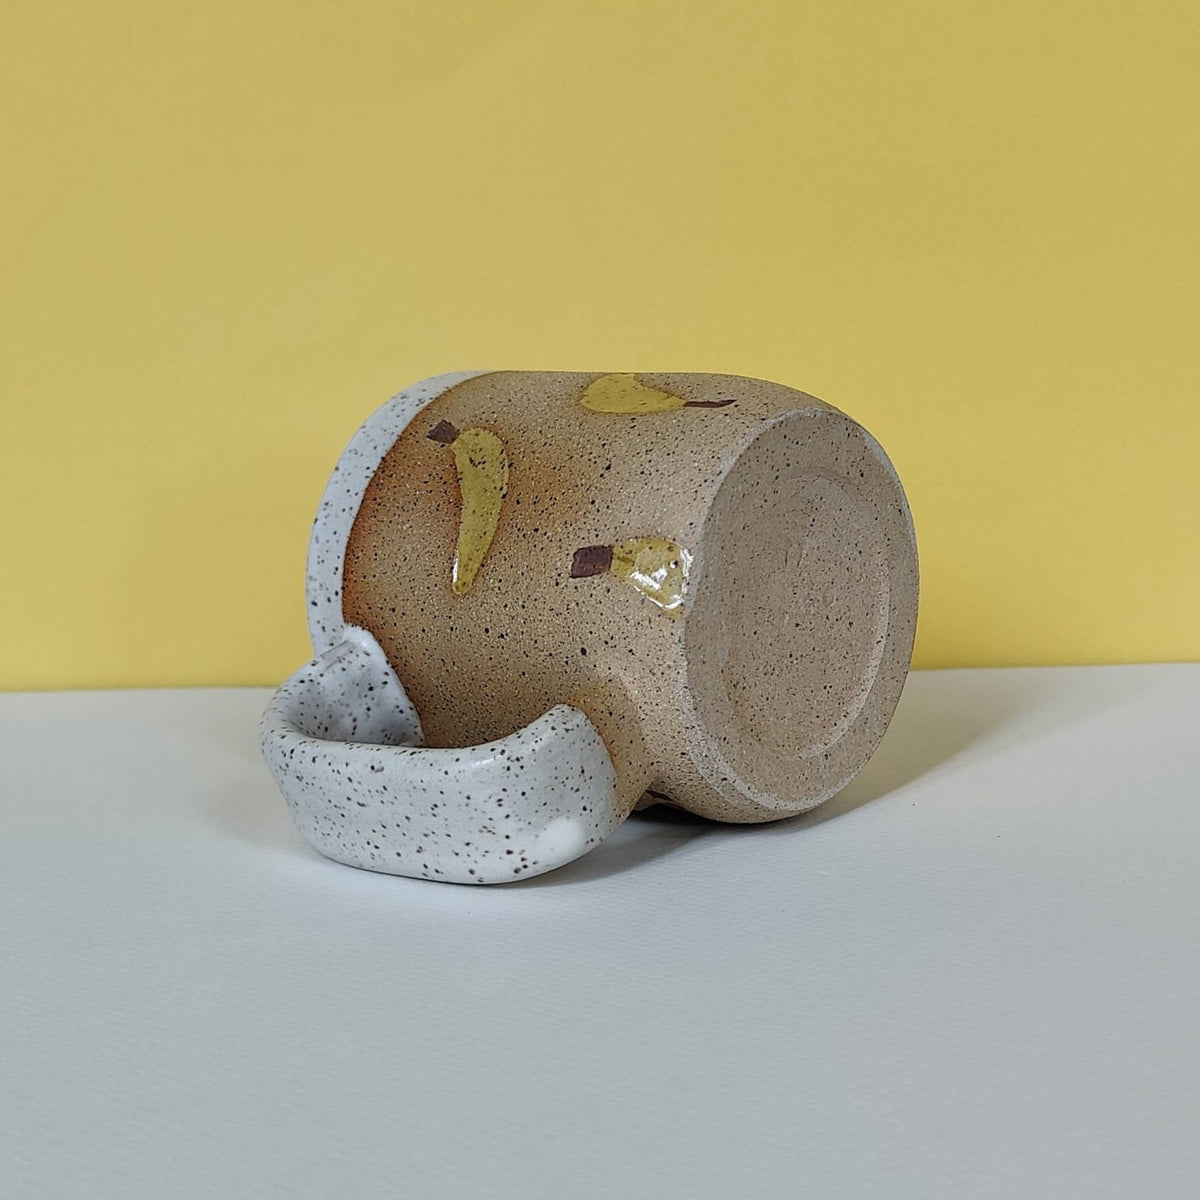 Banana Stamped Ceramic Mug: 16oz